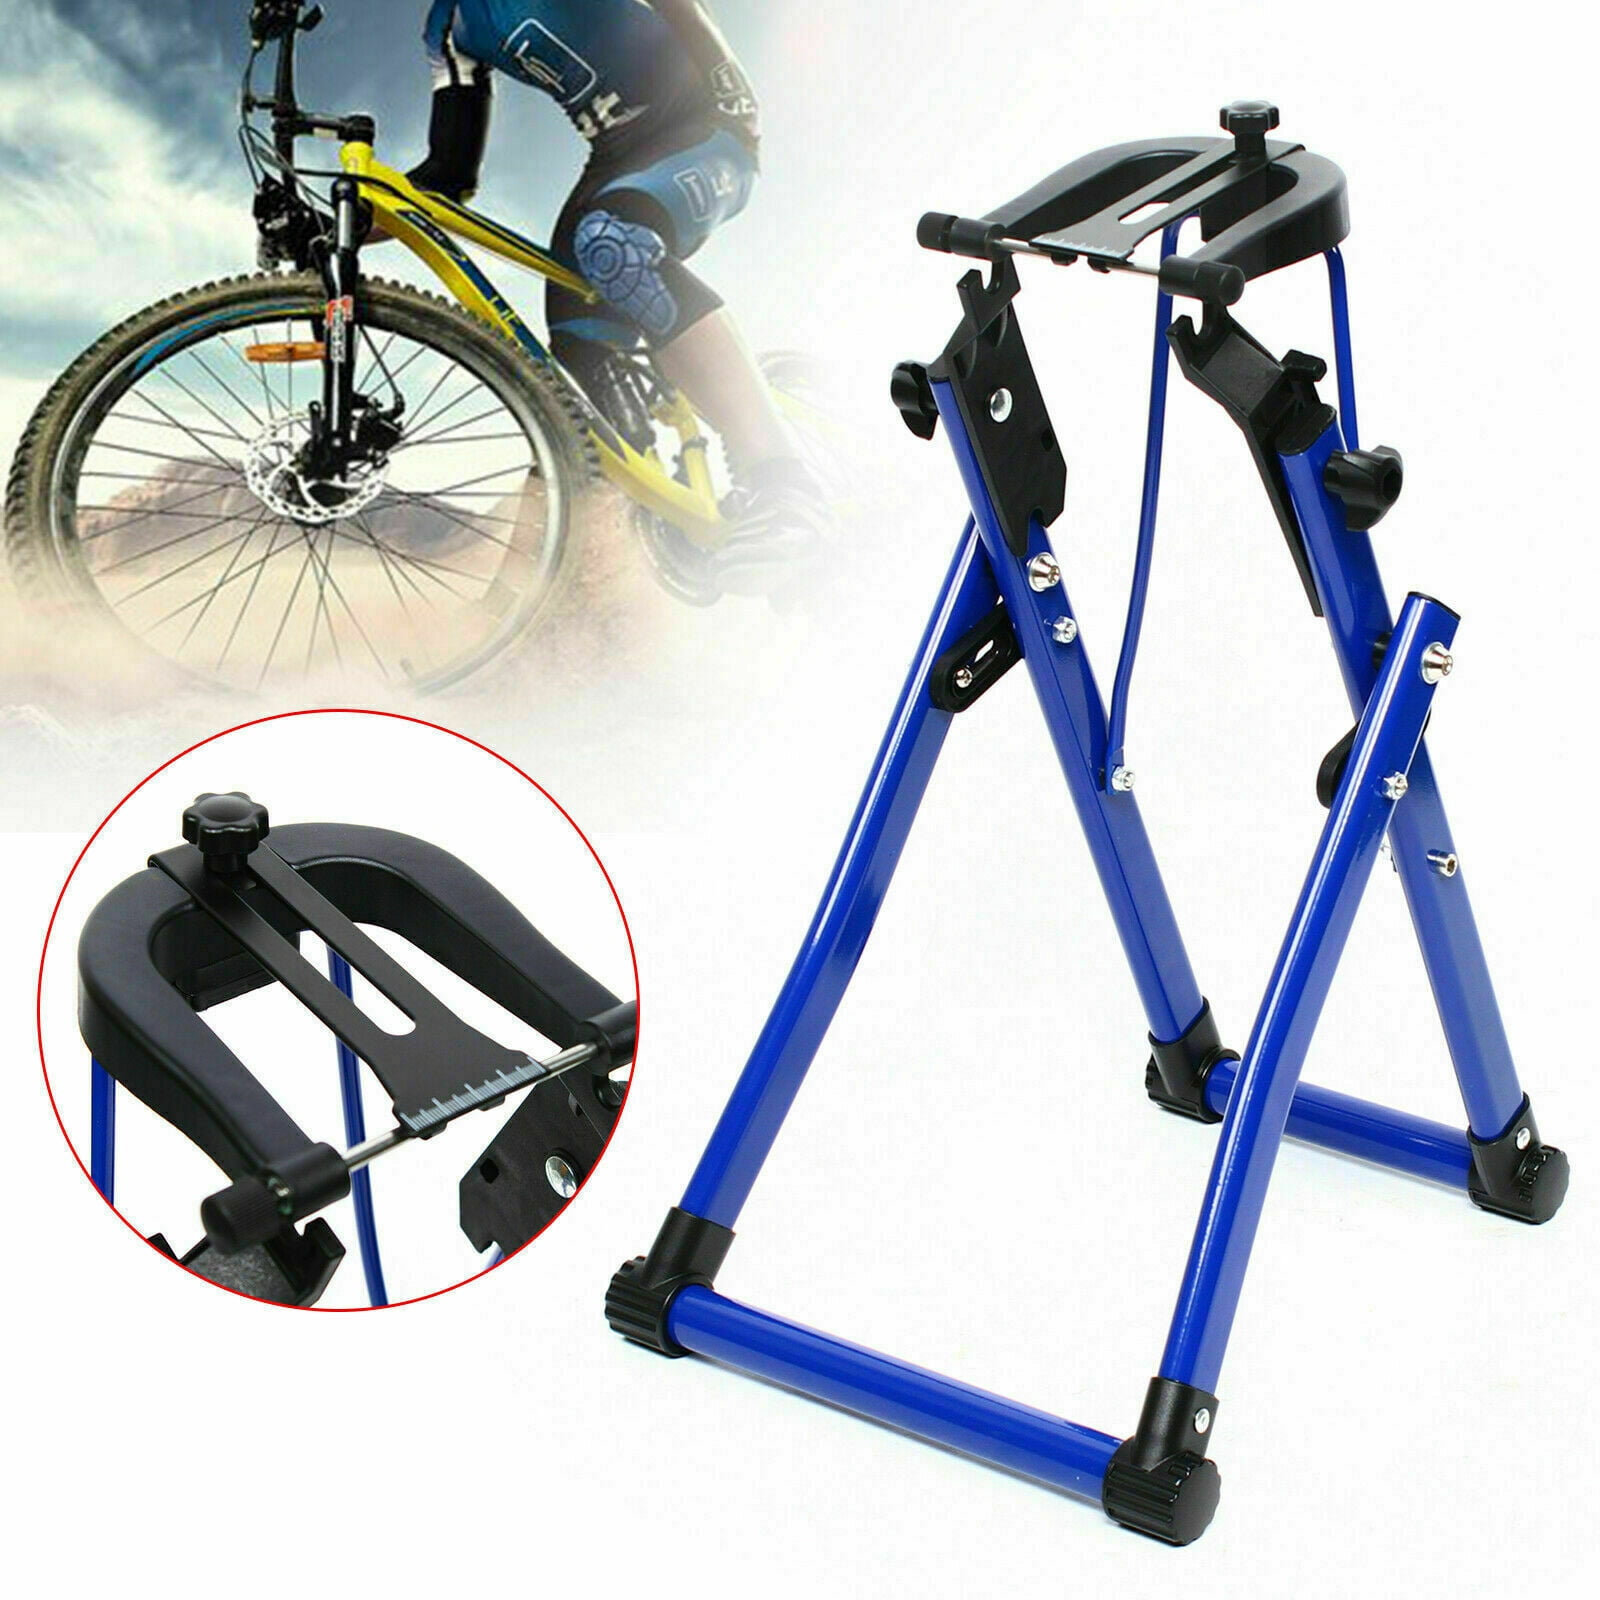 Bicycle Wheel Maintenance Stand Folding Wheel Repair Truing Stand Portable USA 